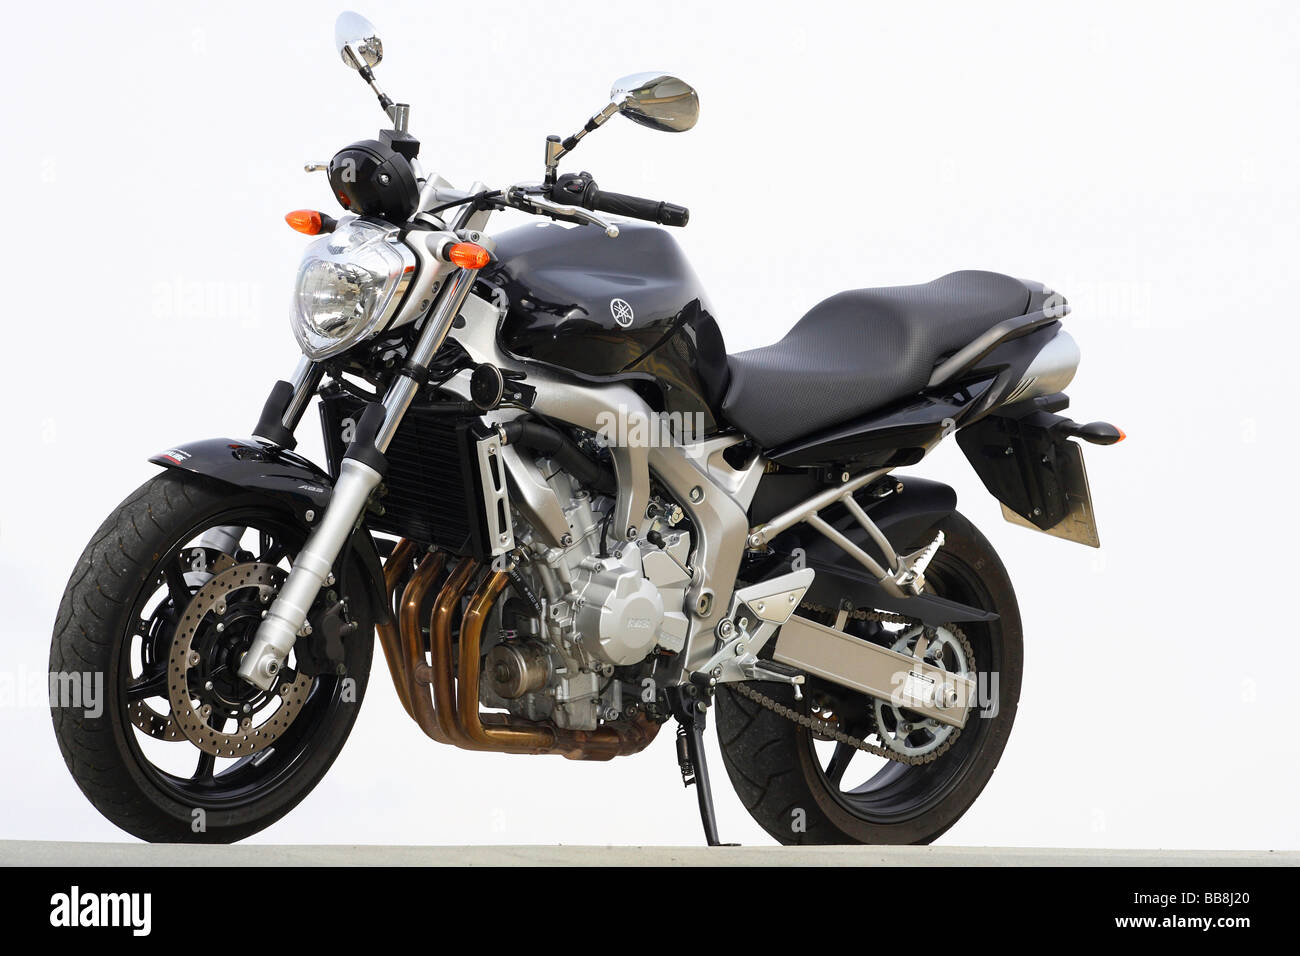 Yamaha FZ6 motorcycle Stock Photo - Alamy